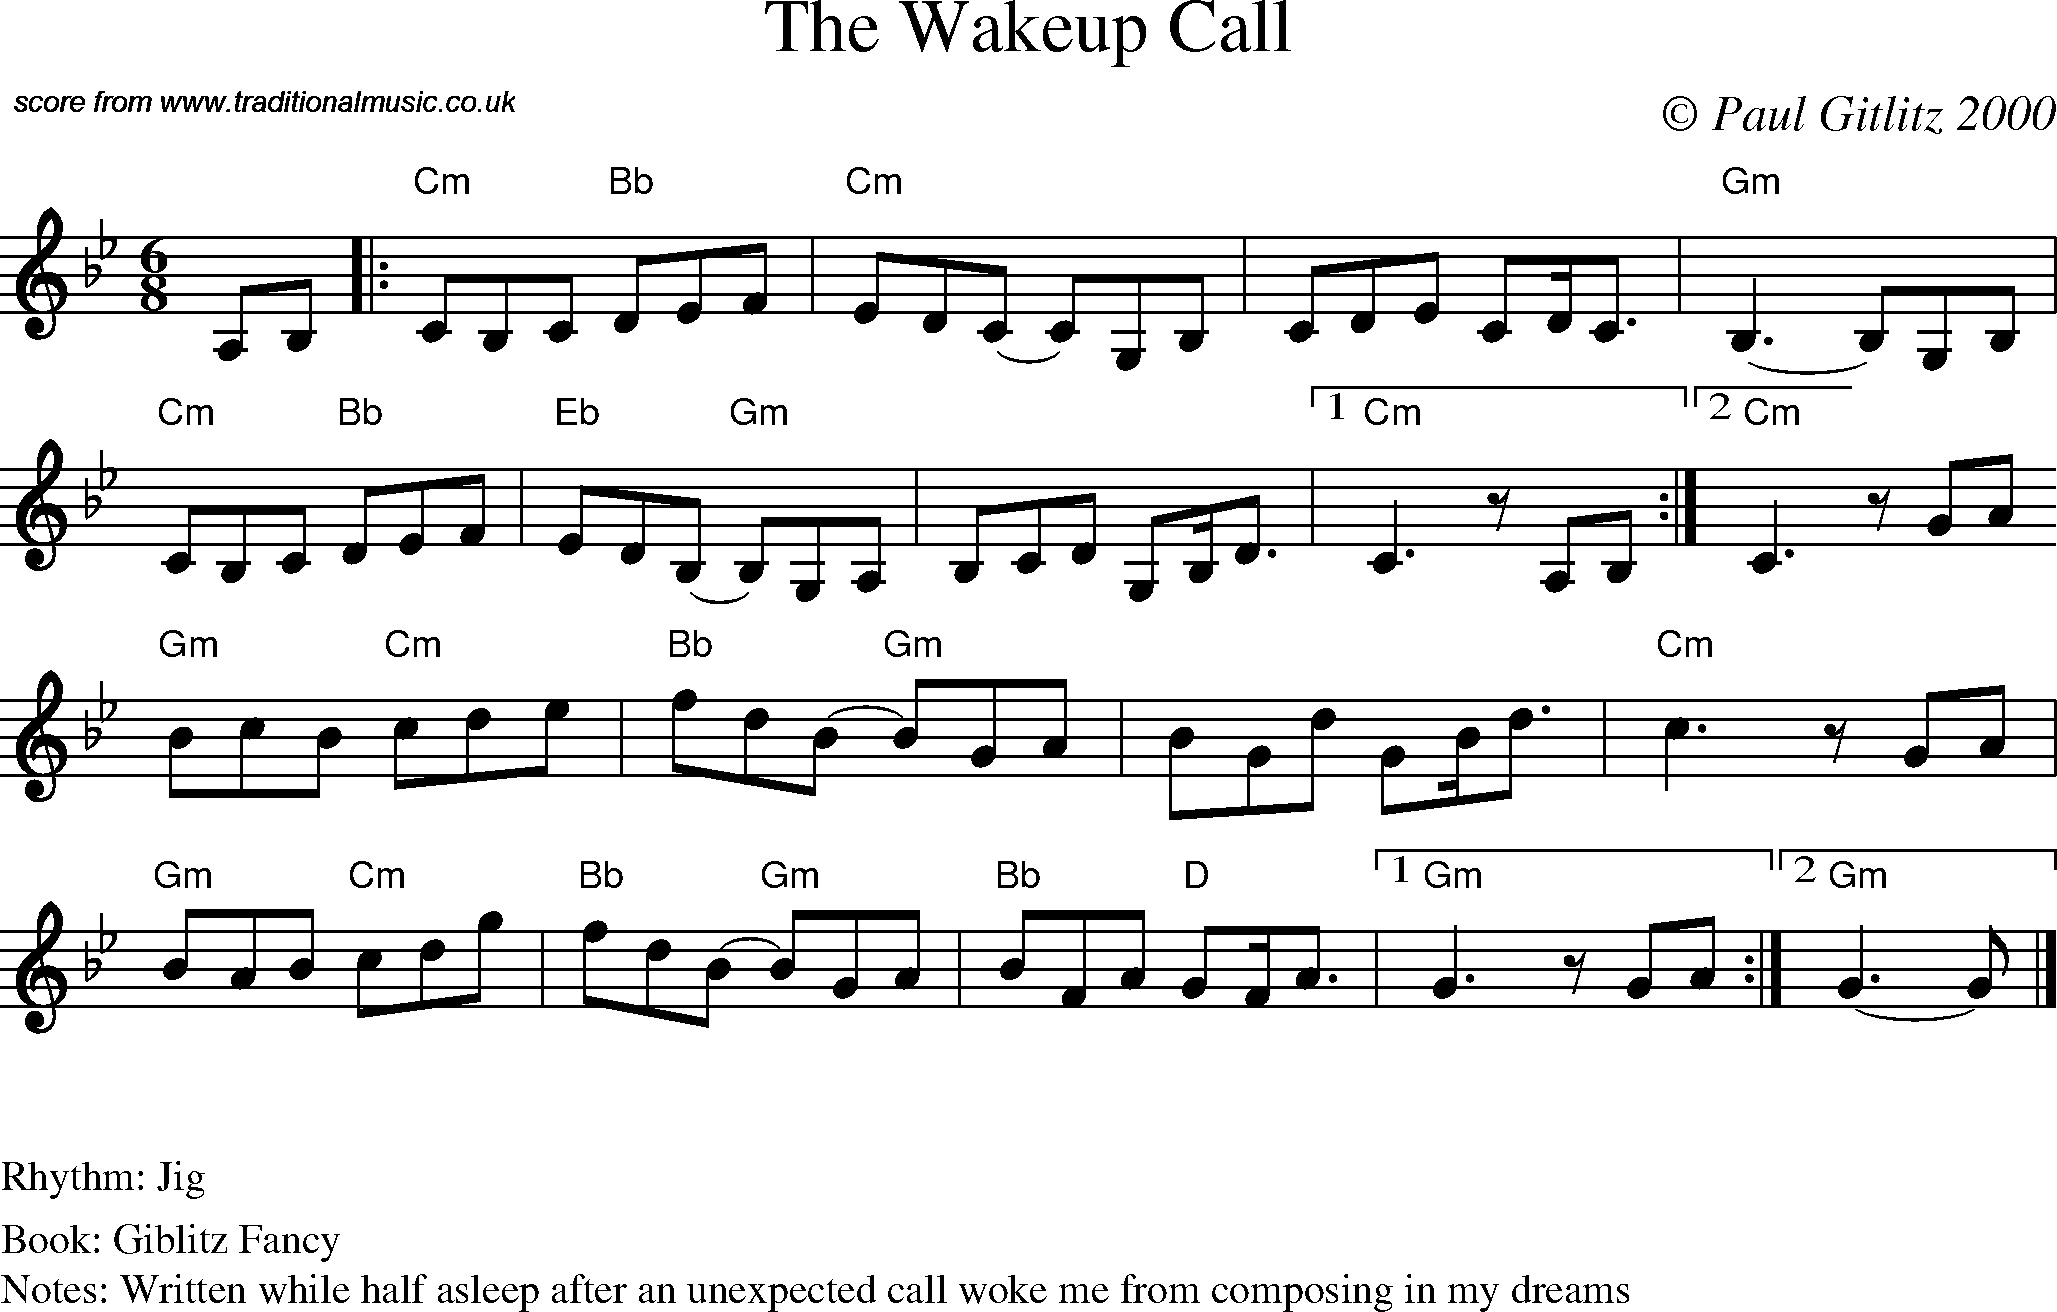 Sheet Music Score for Jig - The Wakeup Call